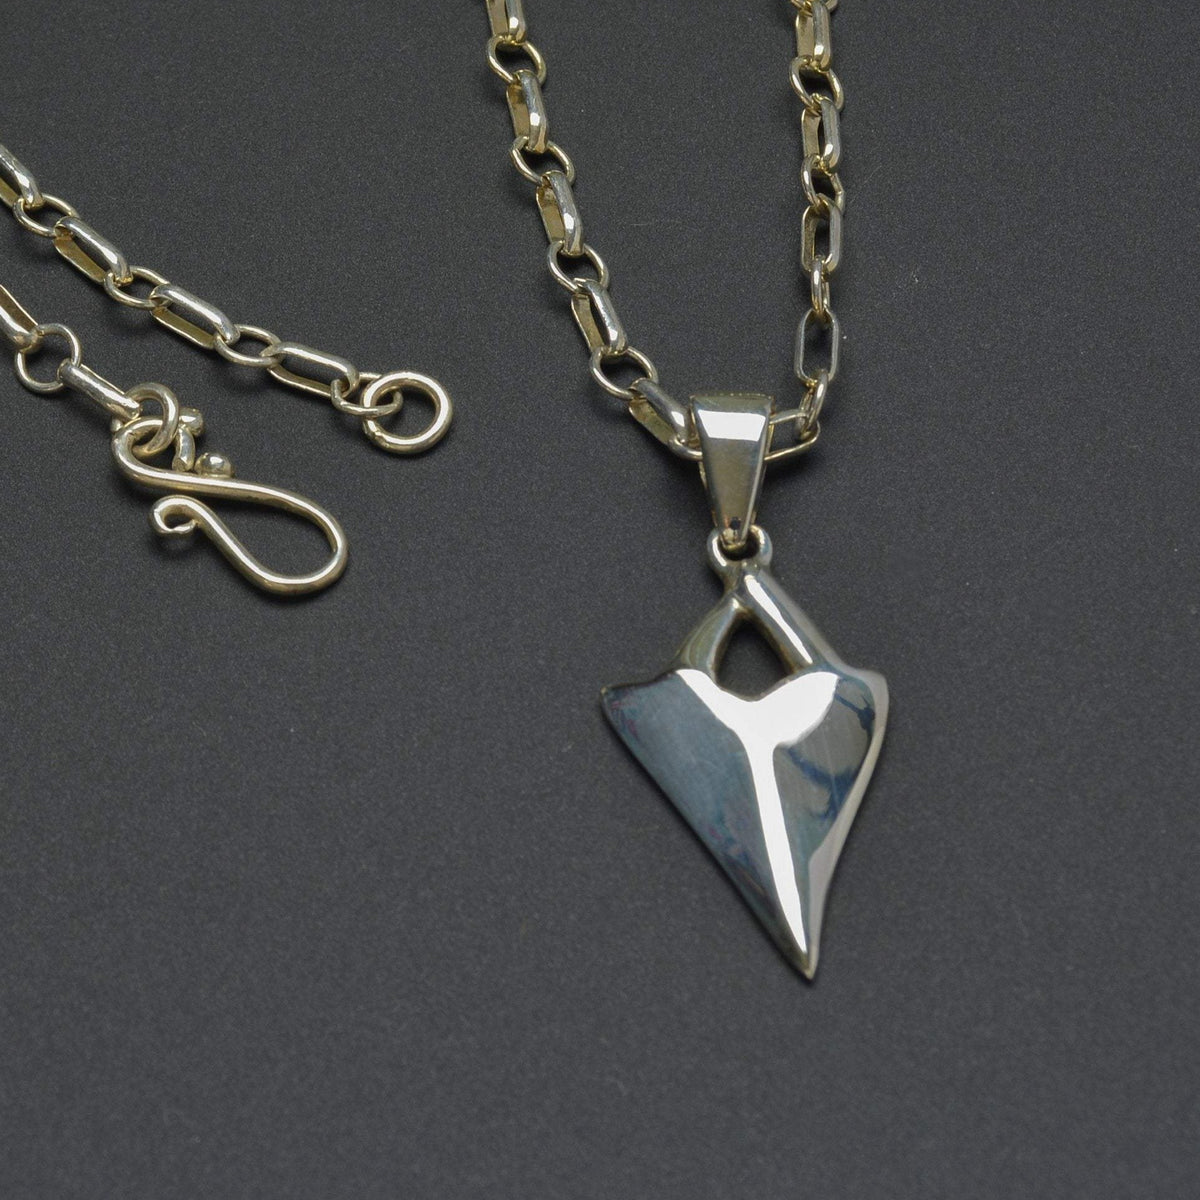 Spear sterling silver pendant